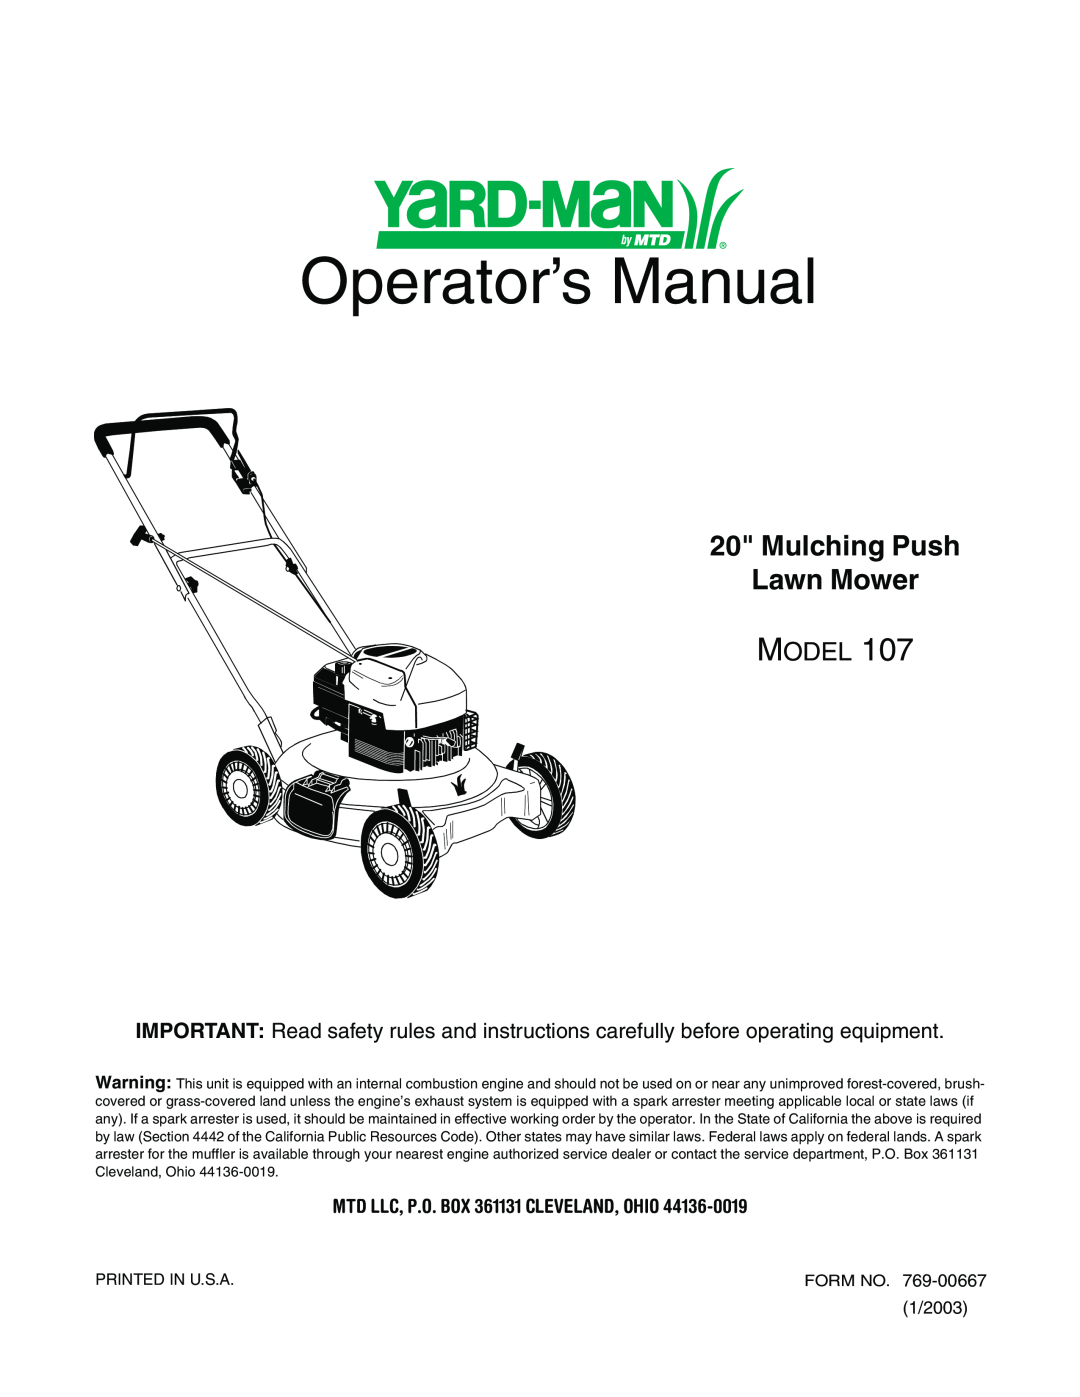 Yard-Man 107 manual MTD LLC, P.O. BOX 361131 CLEVELAND, OHIO, Operator’s Manual, Mulching Push Lawn Mower, Model 